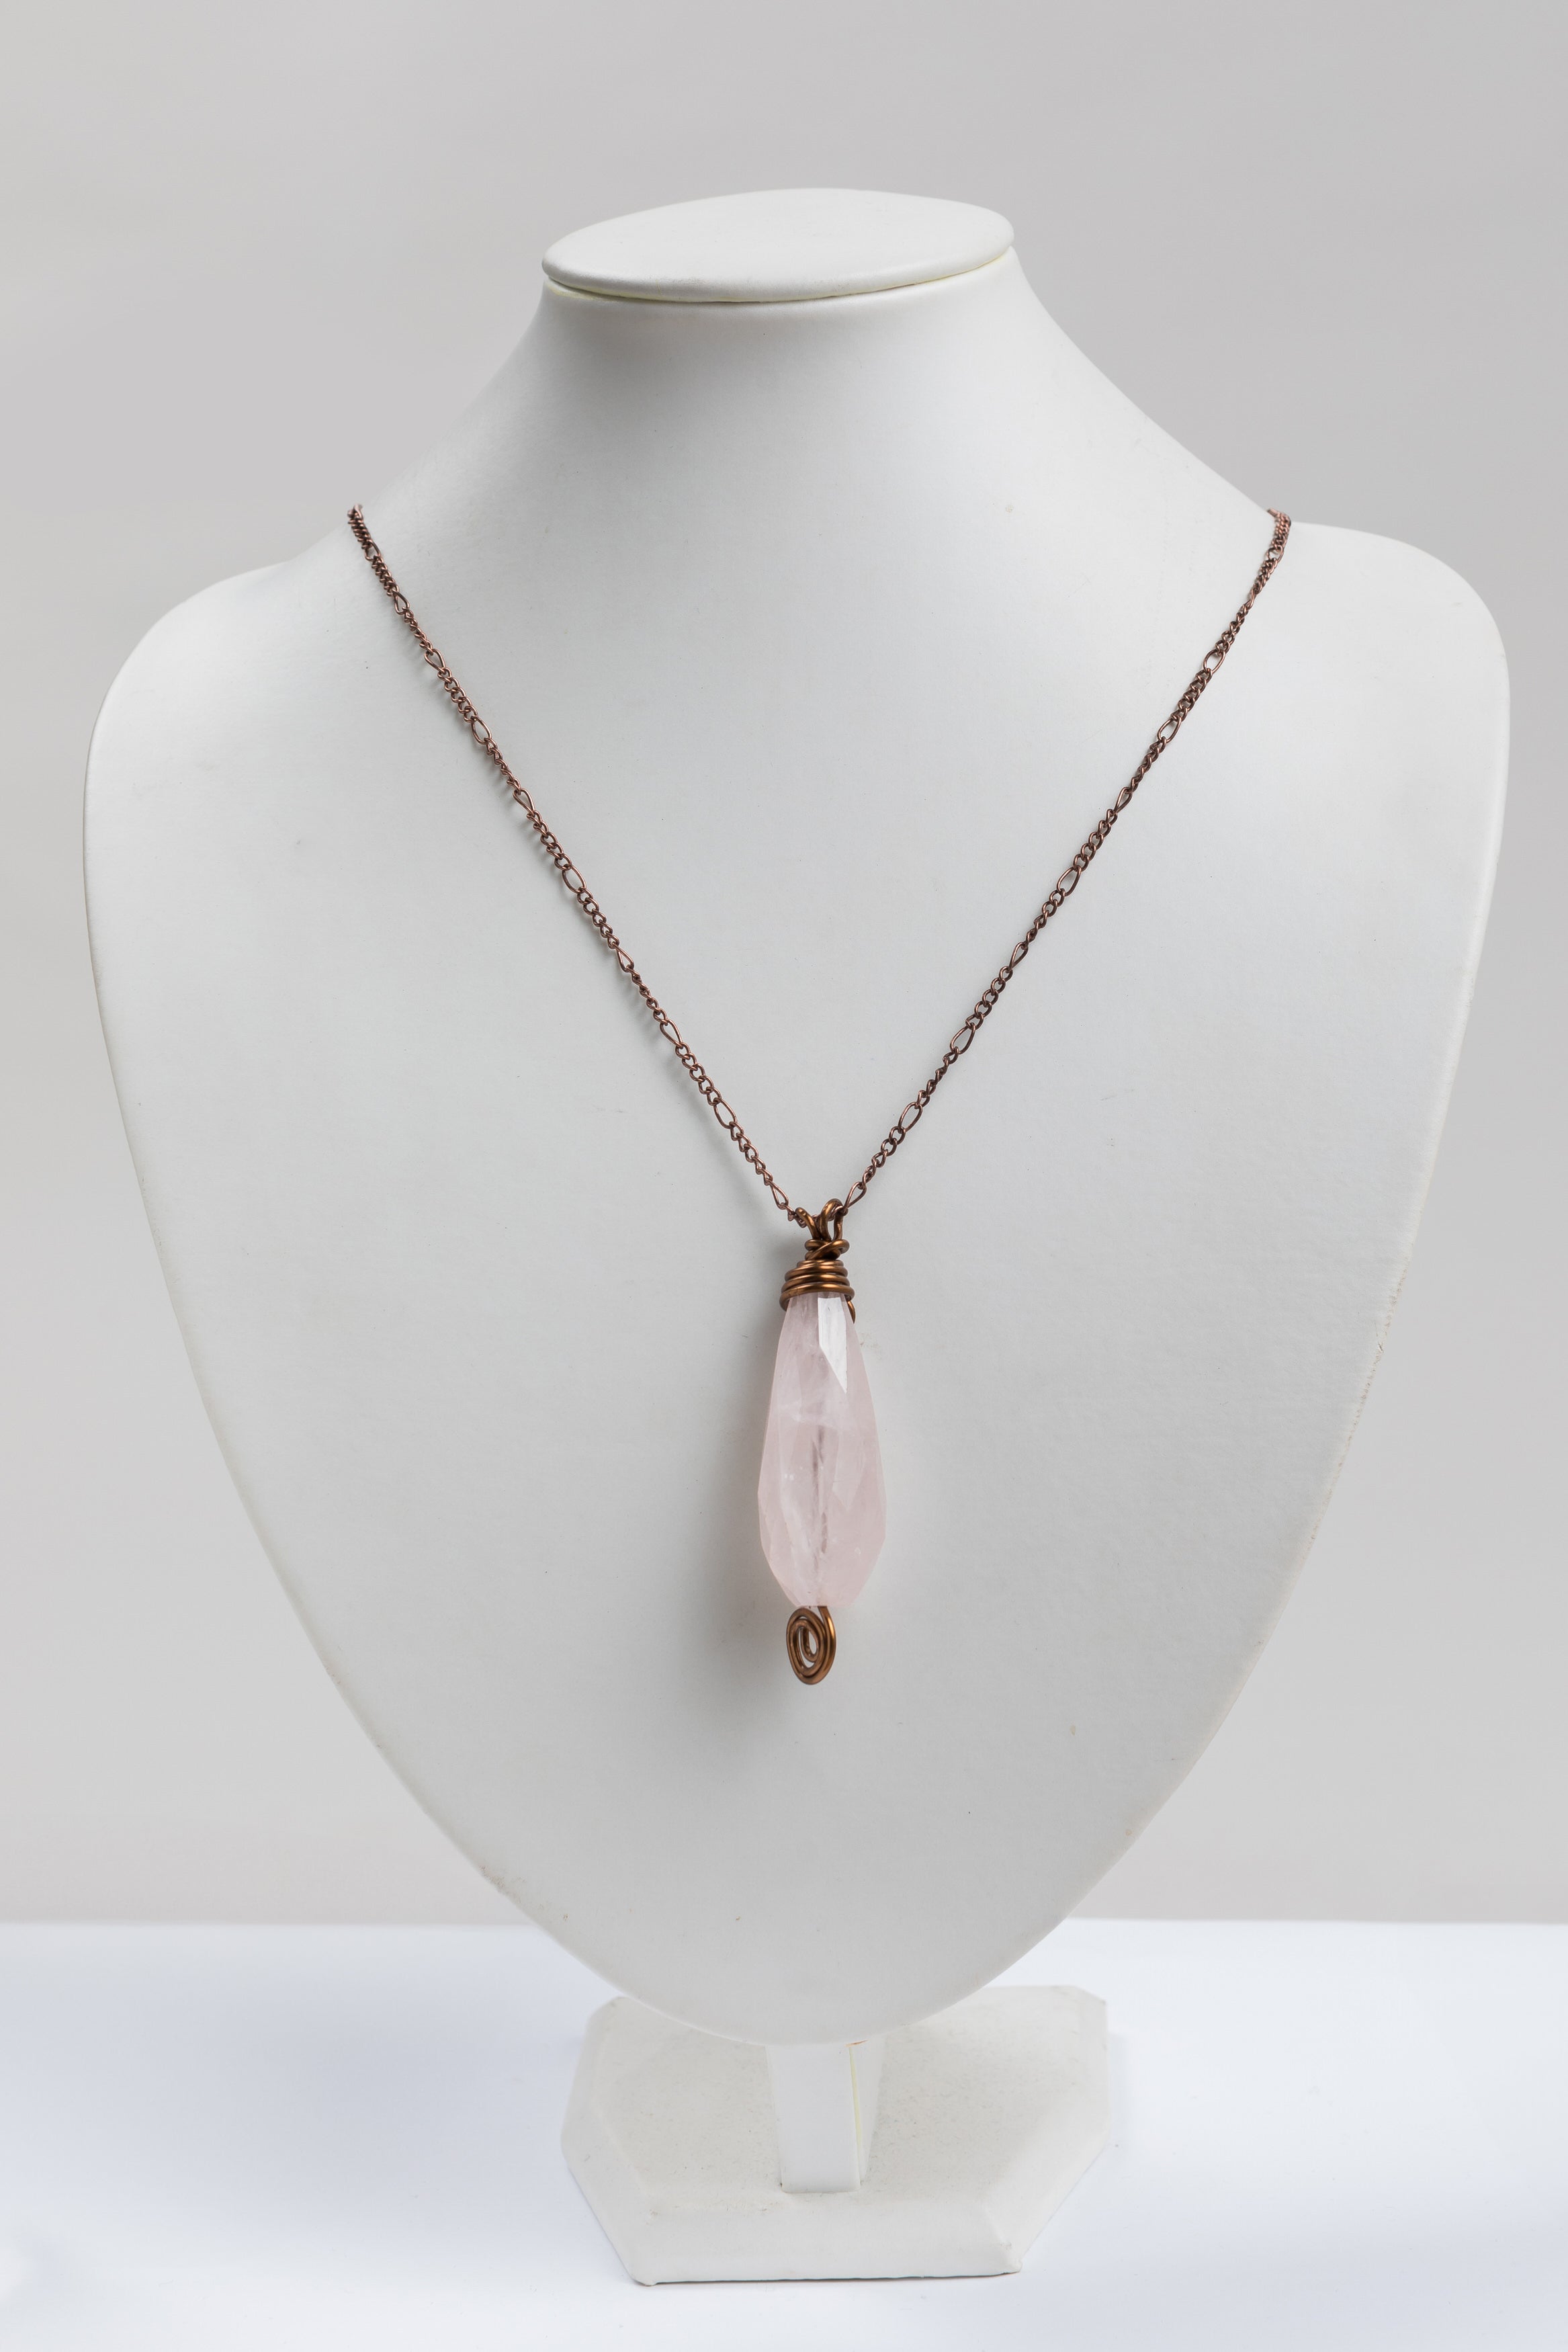 Larki Designs Copper Twisted Metal & Rose Quartz Necklace